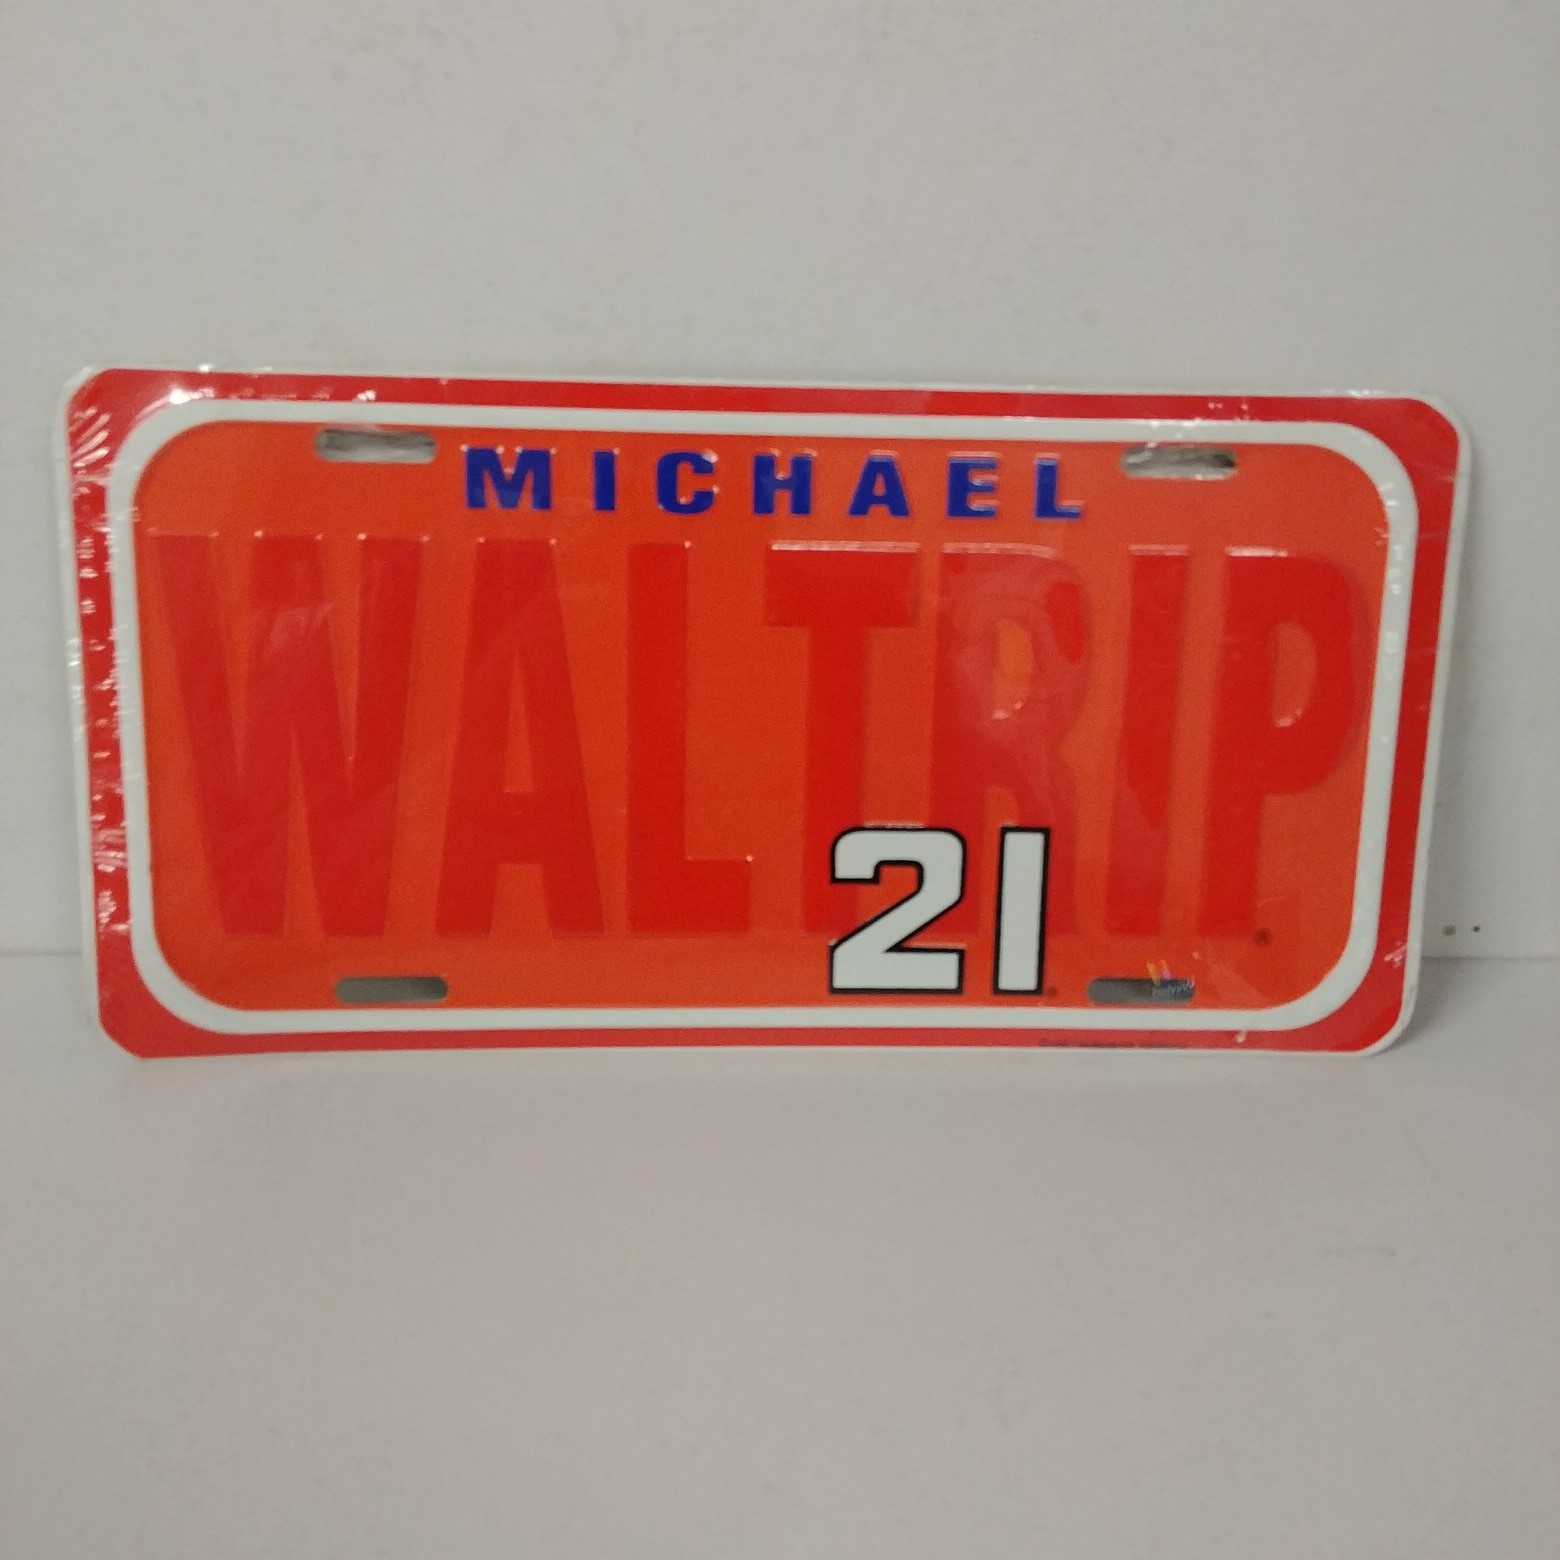 1997 Michael Waltrip Motorcraft "Big Waltrip" metal license plate